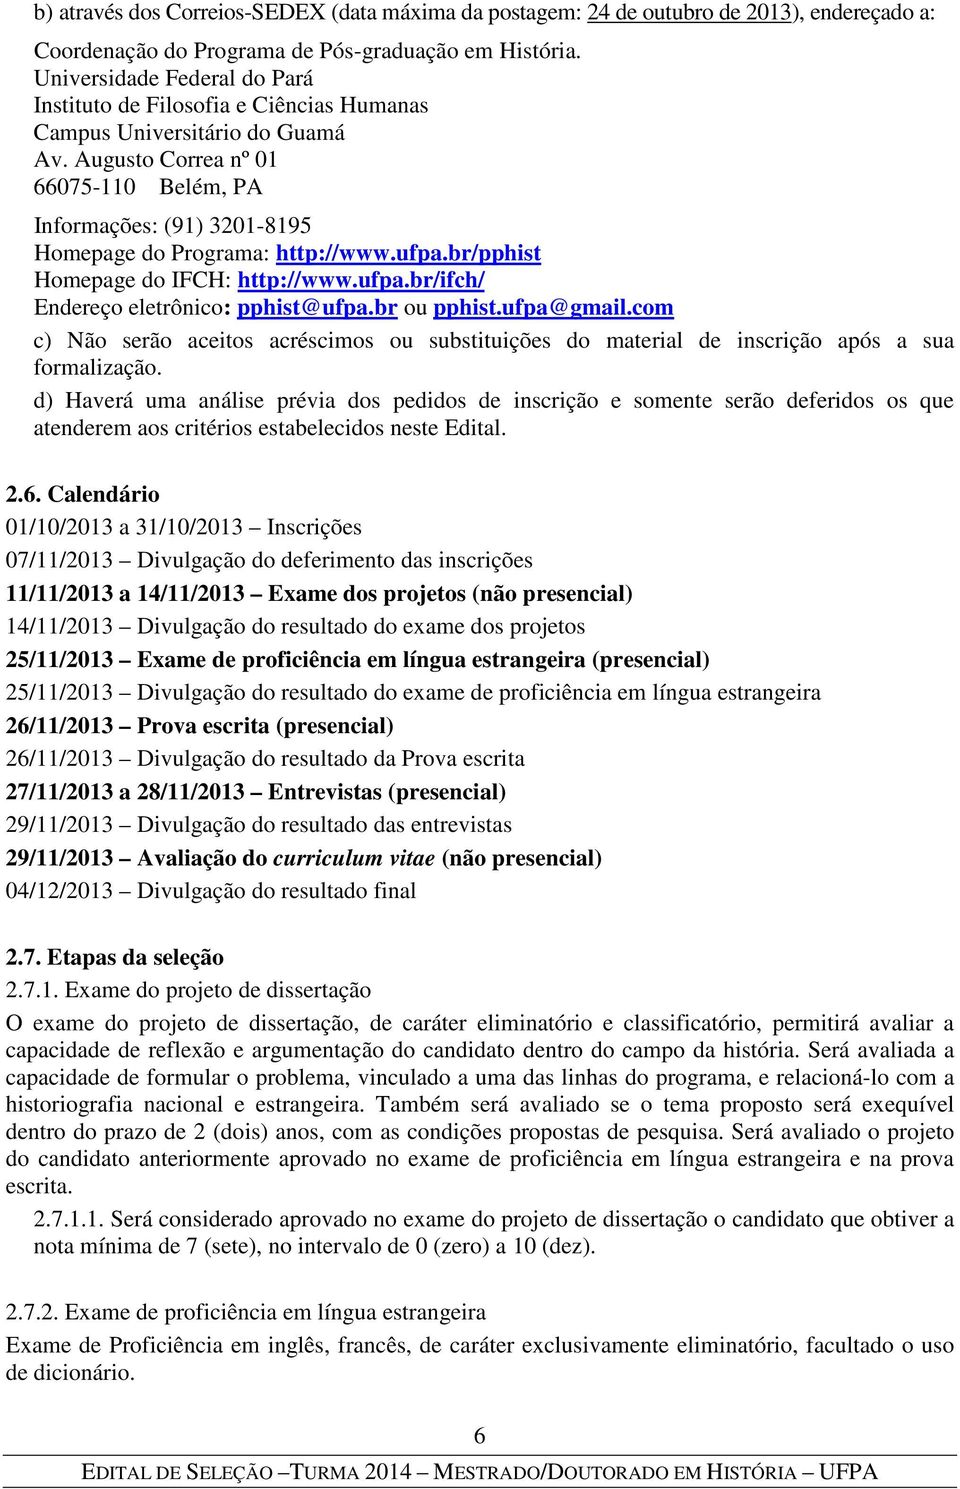 Augusto Correa nº 01 66075-110 Belém, PA Informações: (91) 3201-8195 Homepage do Programa: http://www.ufpa.br/pphist Homepage do IFCH: http://www.ufpa.br/ifch/ Endereço eletrônico: pphist@ufpa.